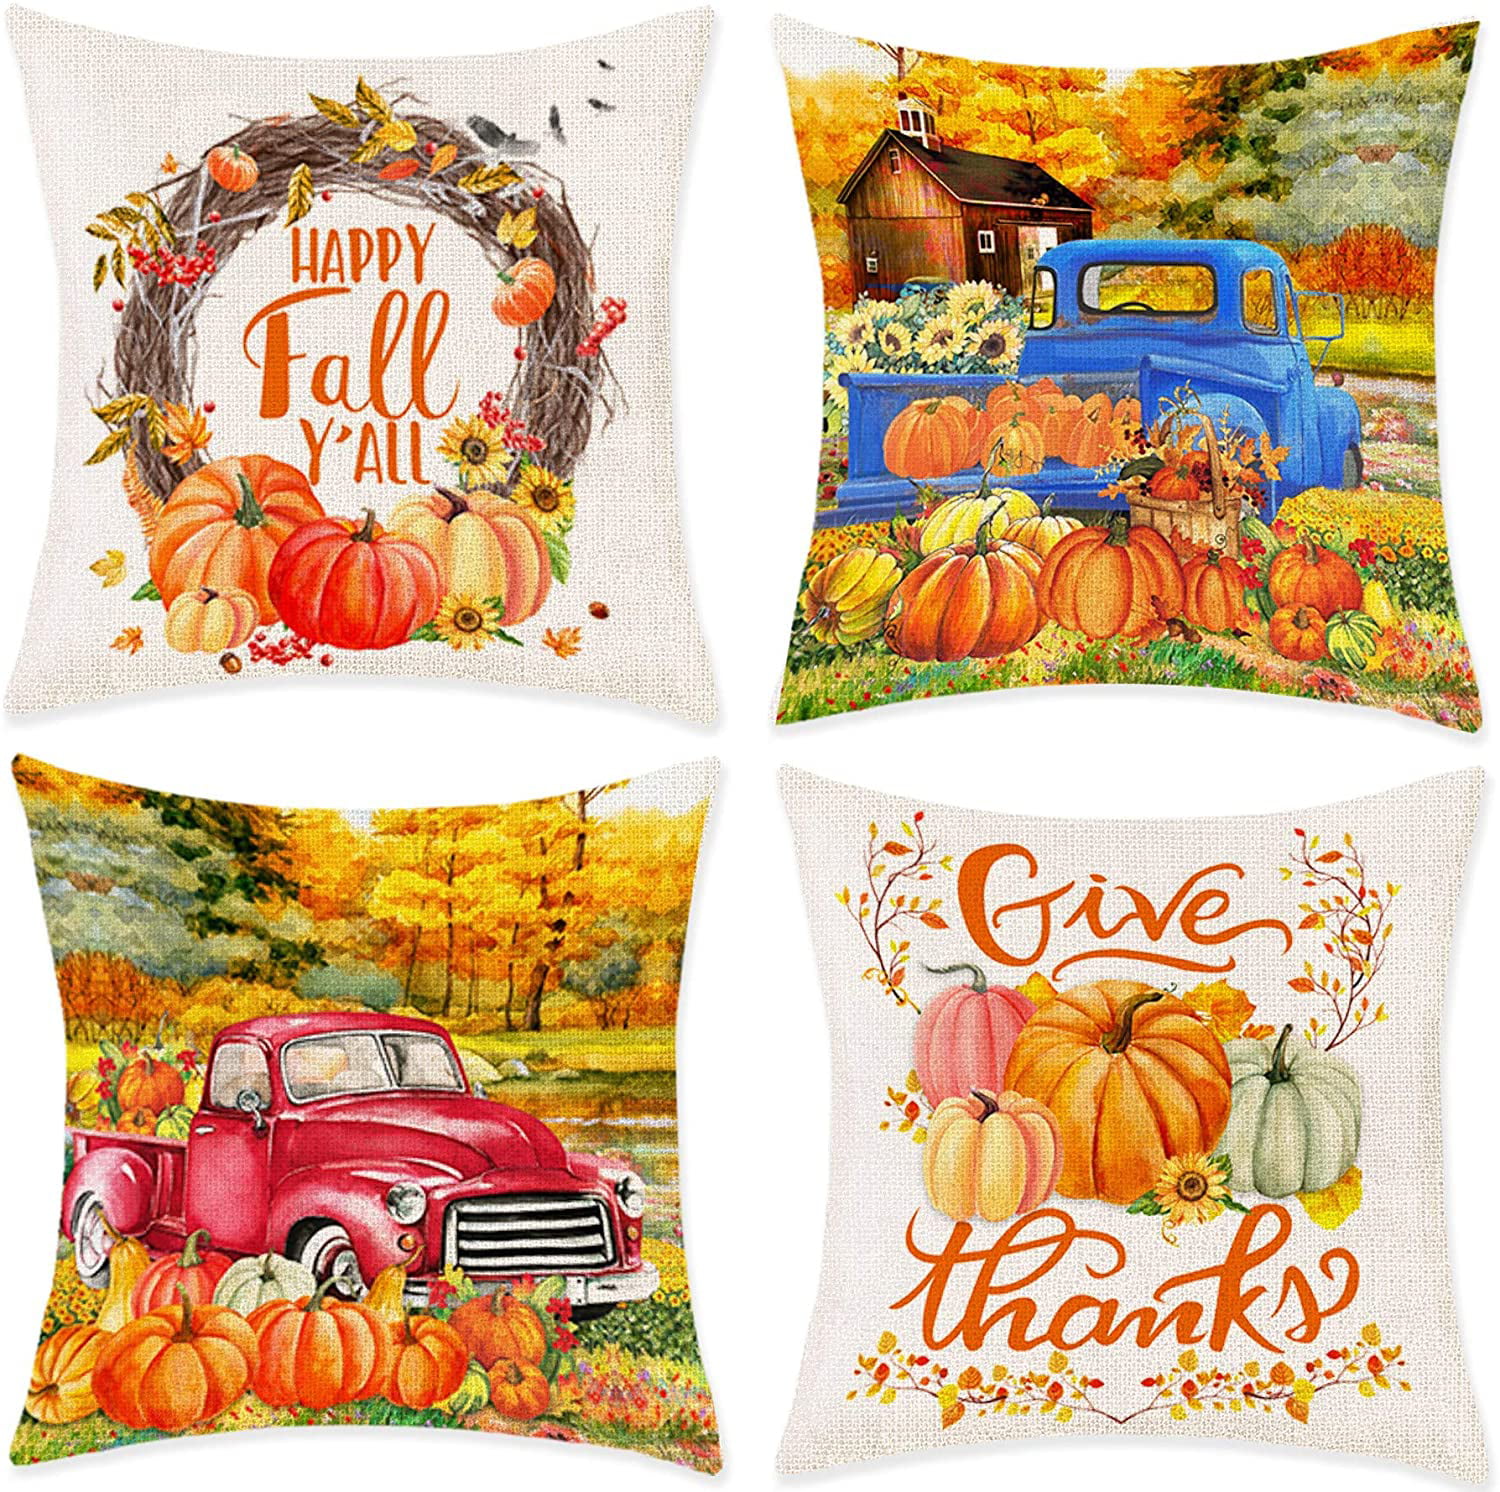 Fall Autumn Harvest Thanksgiving Cushion Cover Throw Pillows Case Decor 